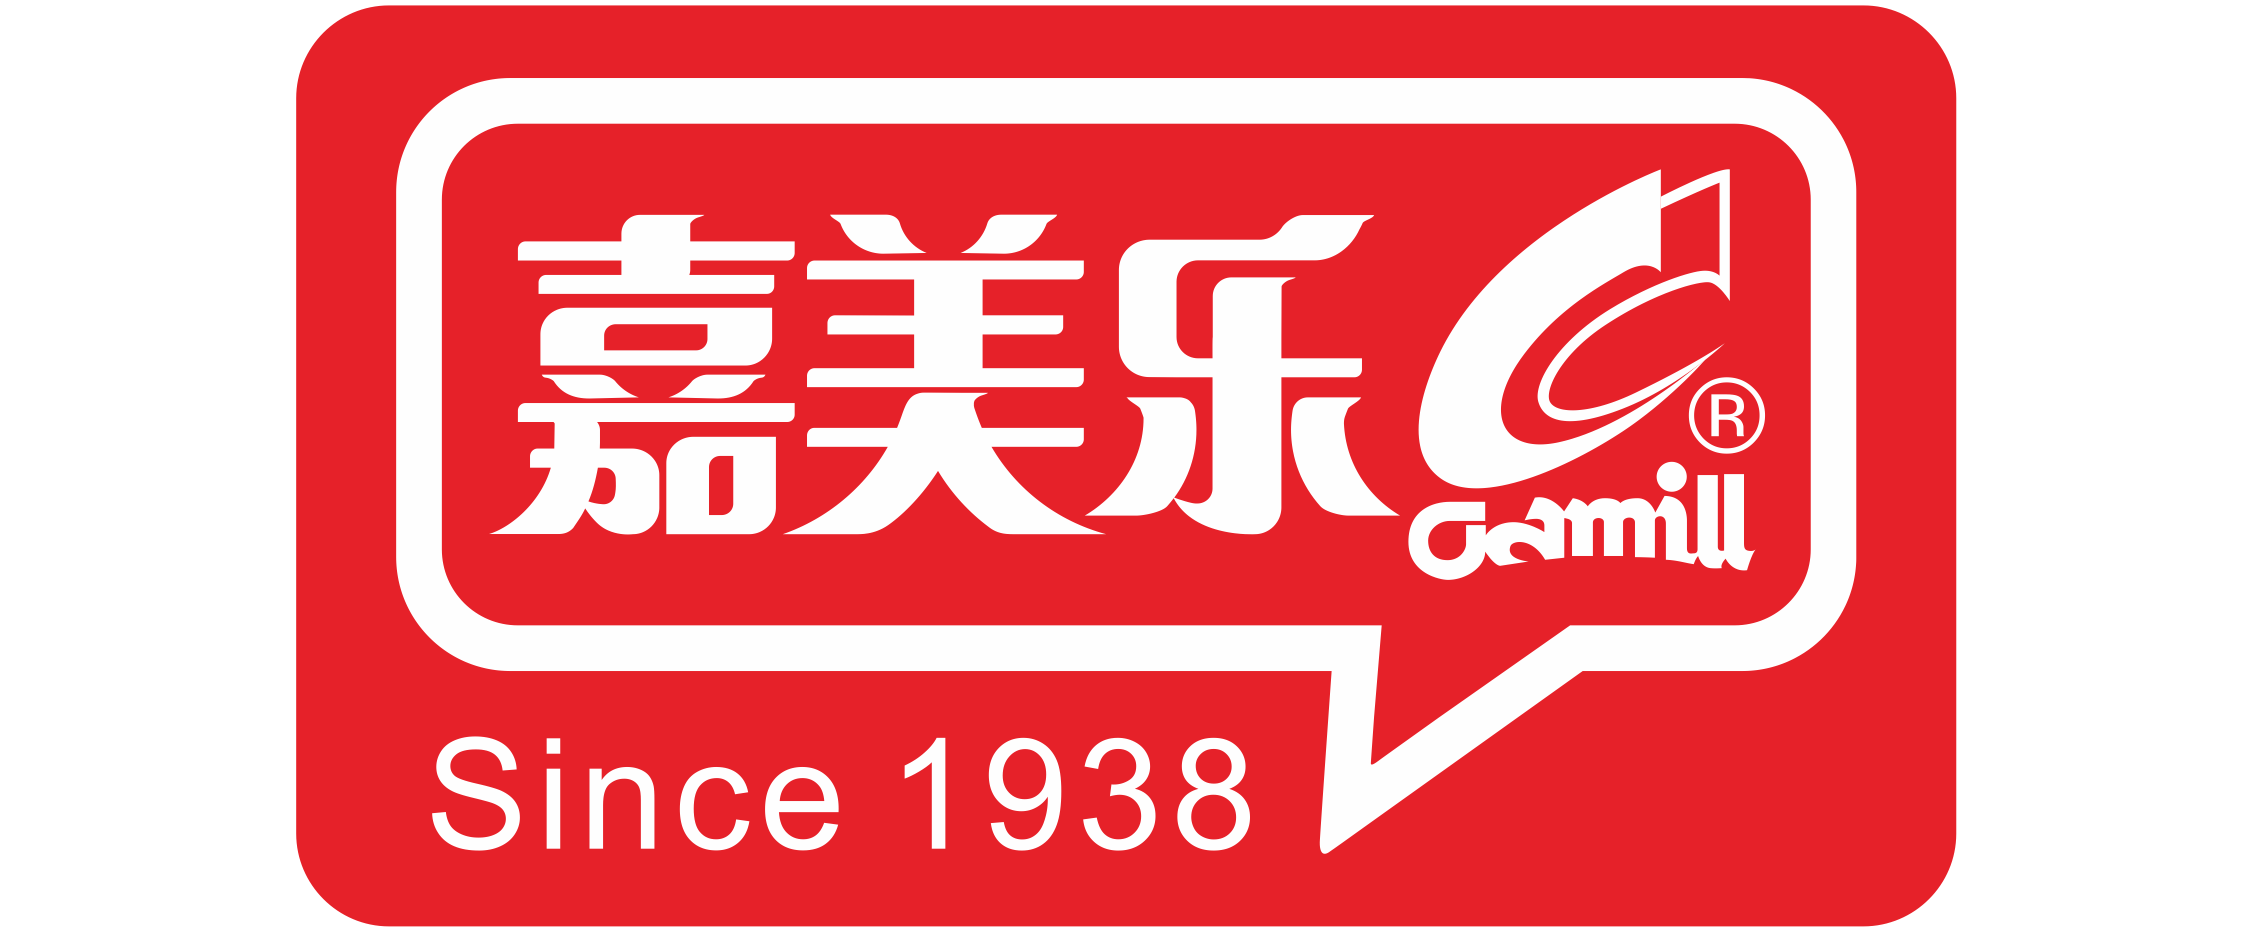 Zhongshan Camill Foodstuffs Co.,LTD